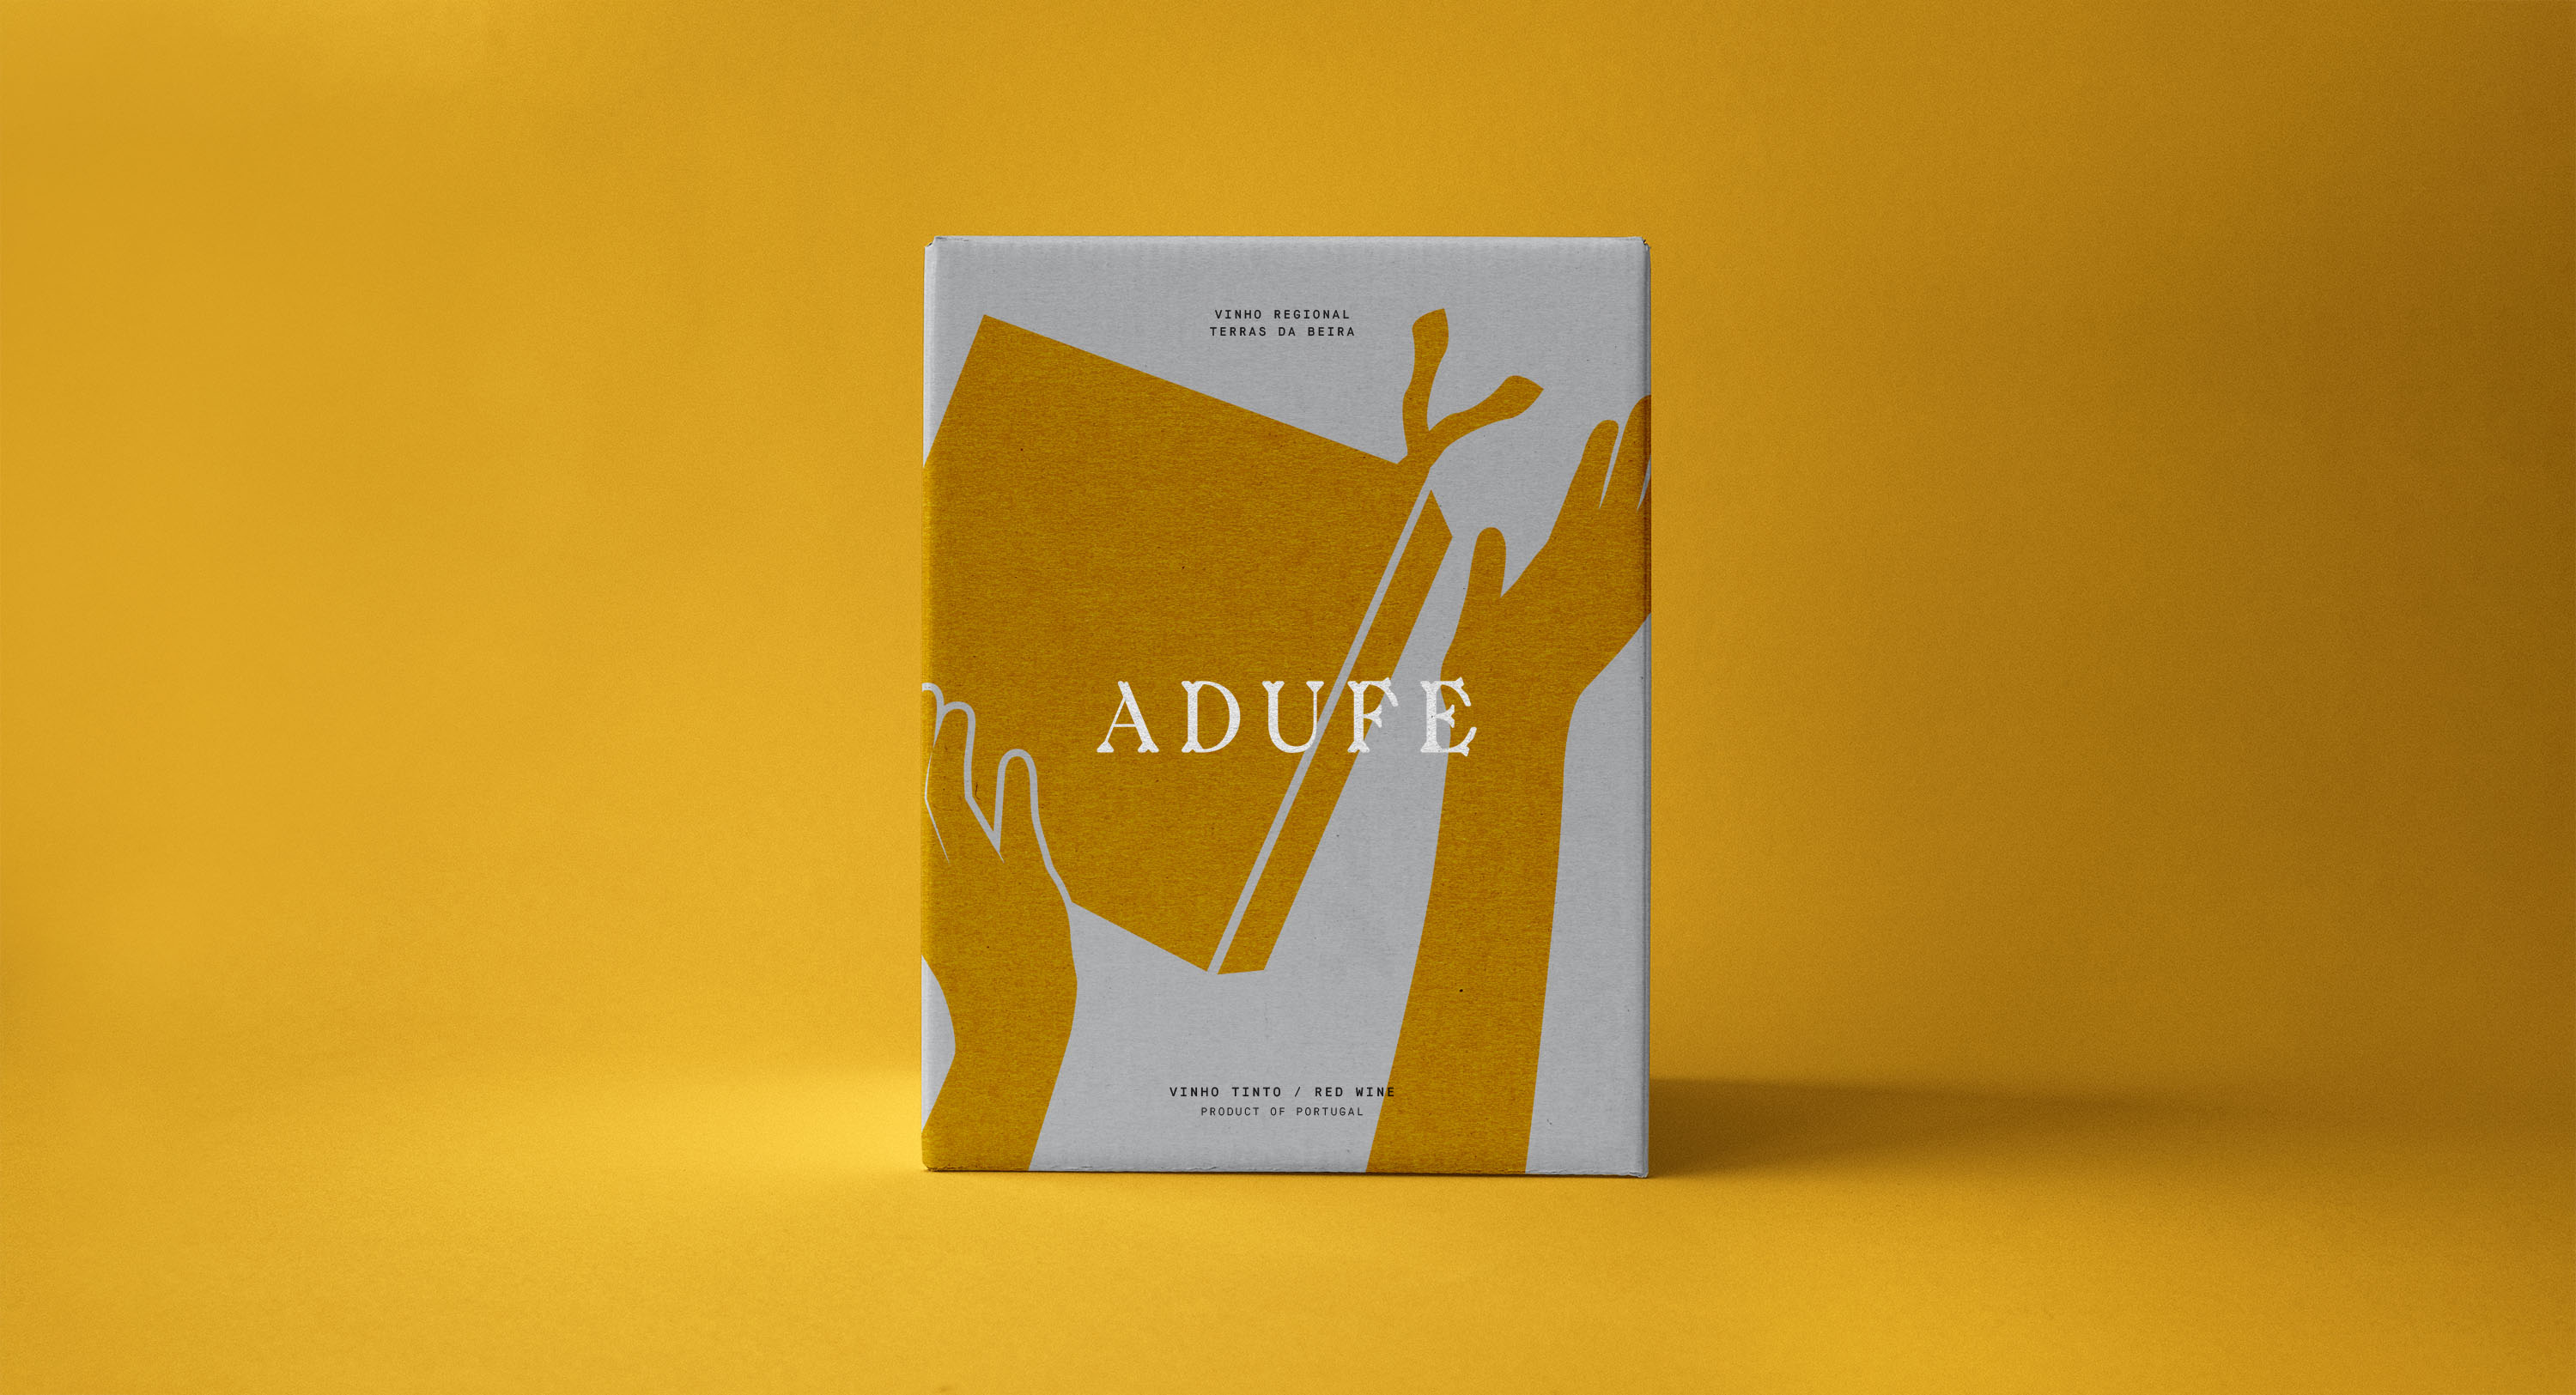 327 Creative Studio Create Packaging Design for Adufe Wine